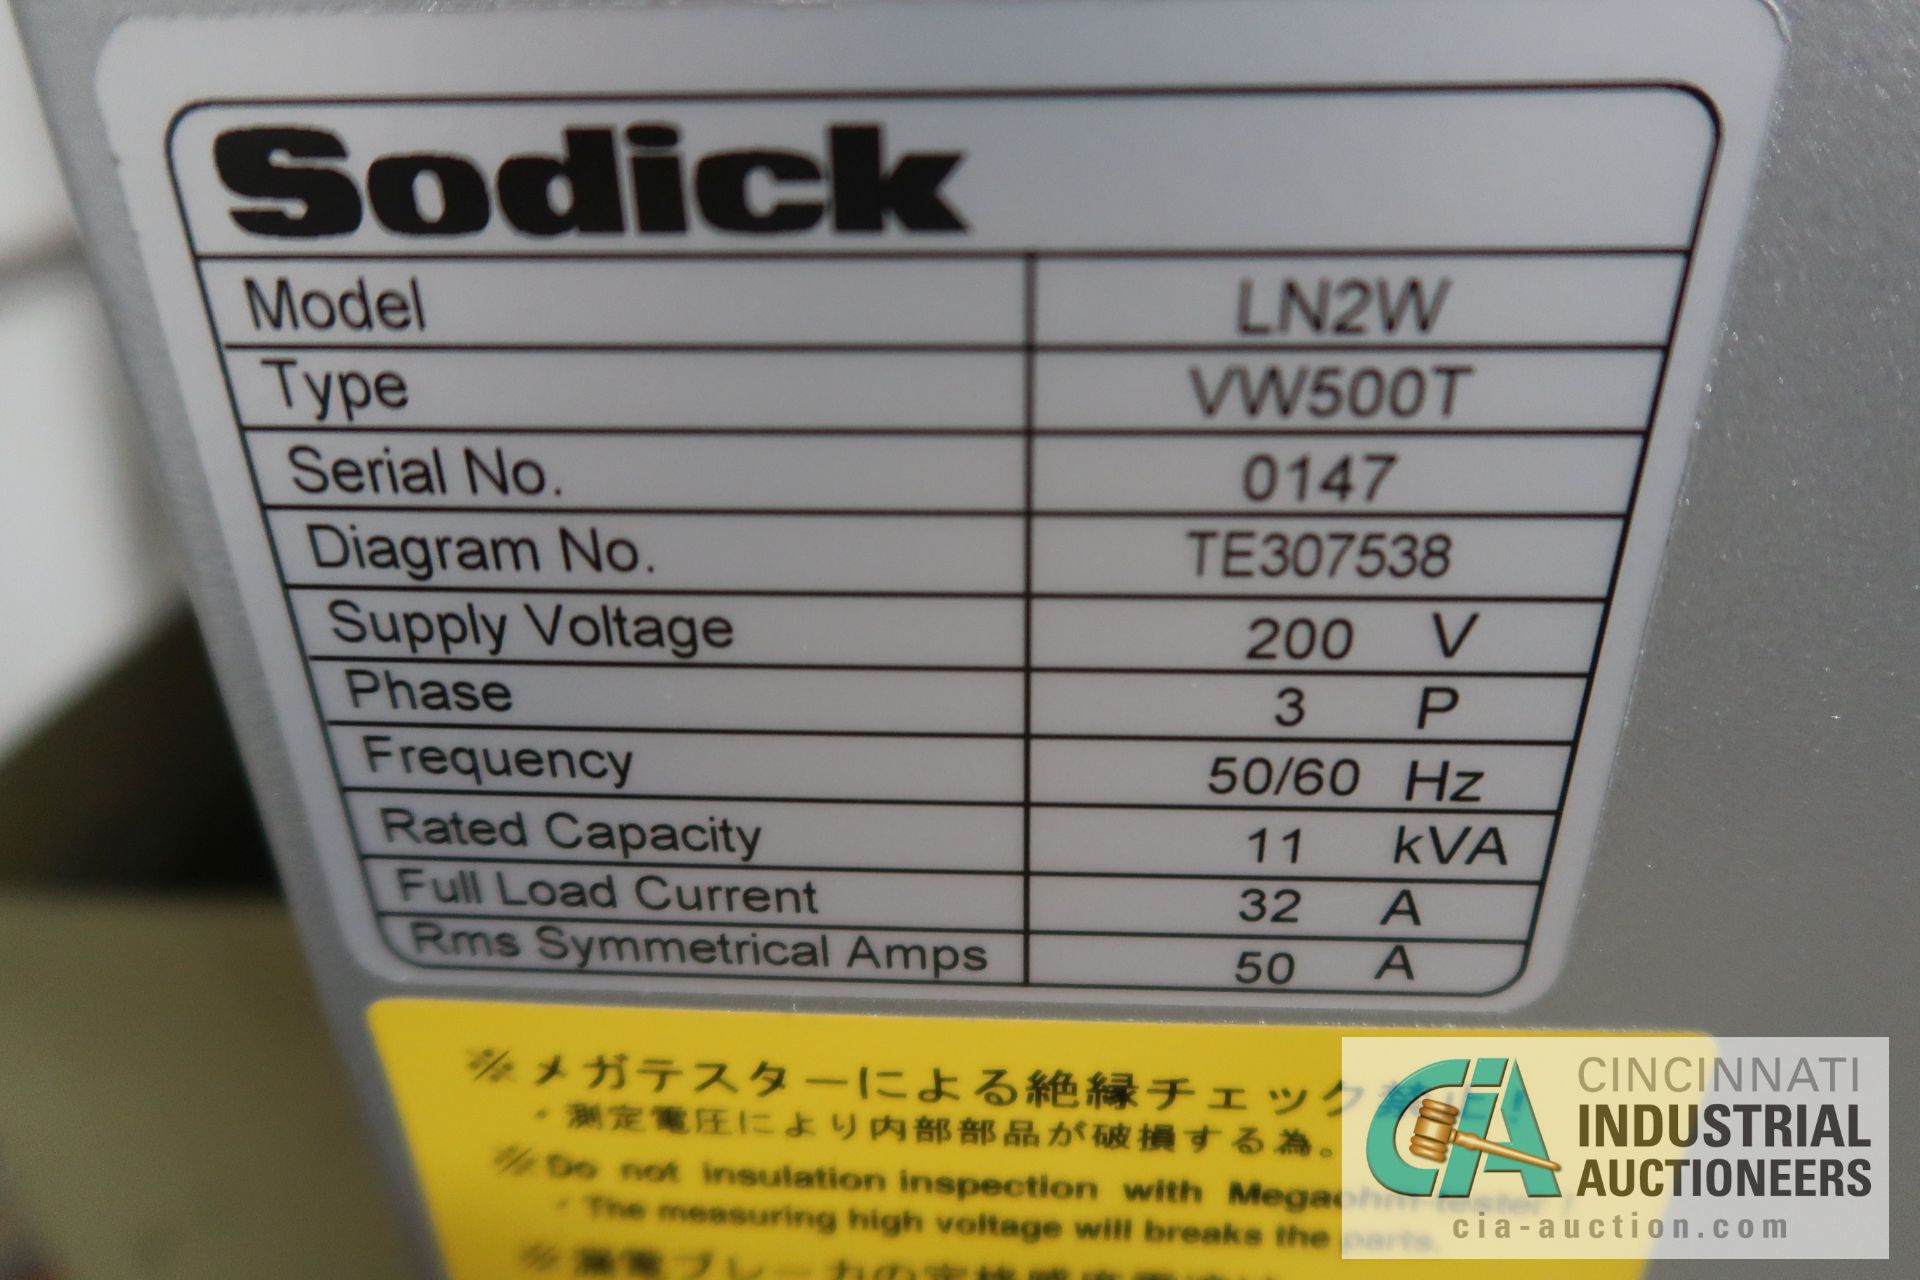 SODICK MODEL VZ-500L WIRE EDM MACHINE; S/N 0147, LN3W CONTROLS, 22" X 29" TABLE, VW500T TYPE (NEW - Image 19 of 20